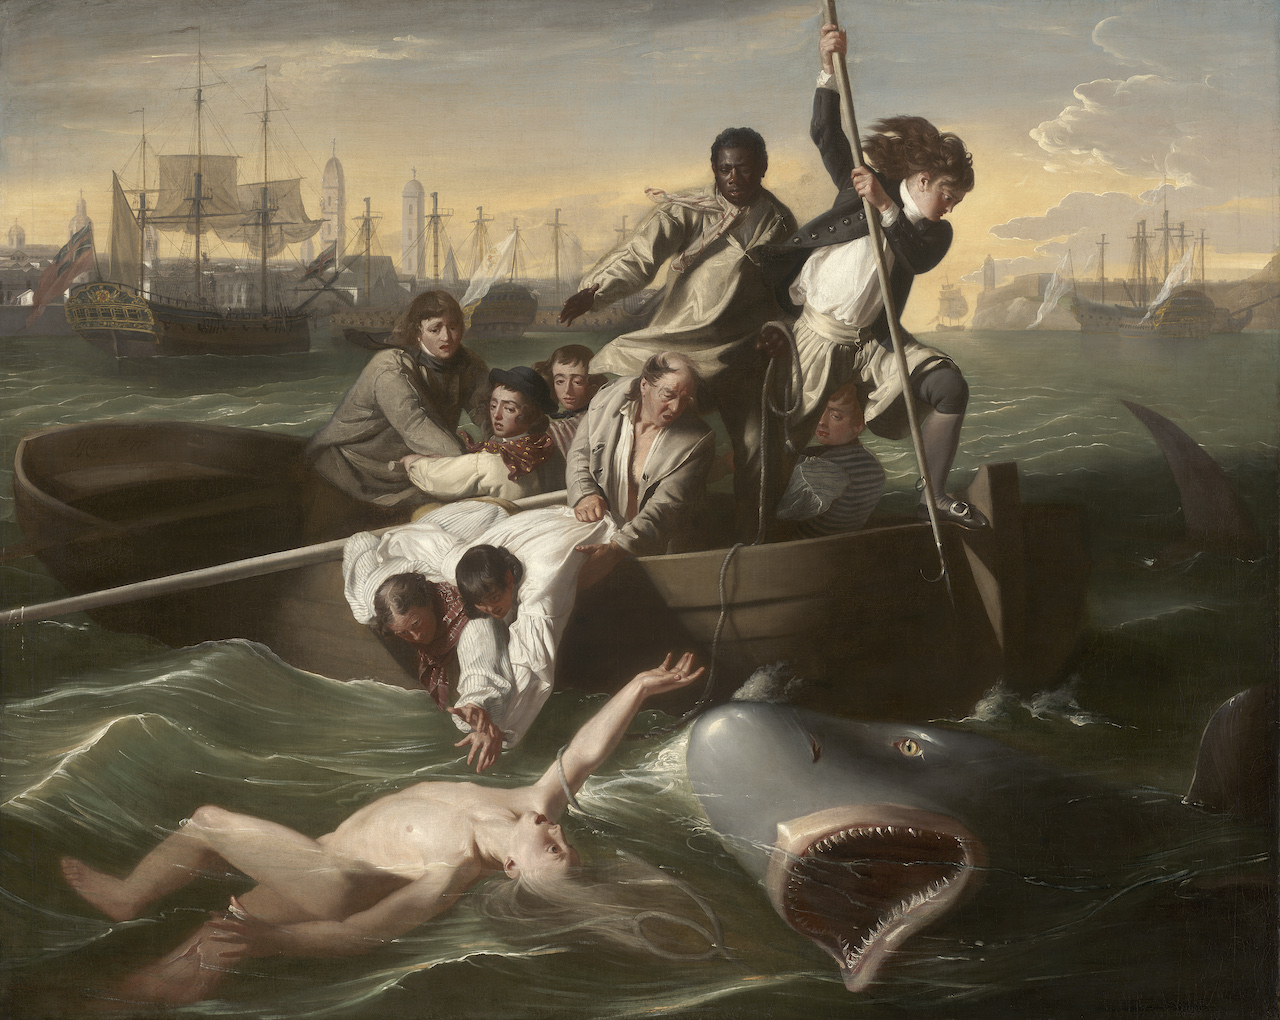 The Wick - John Singleton Copley RA, Watson and the Shark, 1778
Oil on canvas, 183.5 x 229.6 cm
Museum of Fine Arts, Boston. Gift of Mrs George von Lengerke Meyer
Photograph © 2024 Museum of Fine Arts, Boston